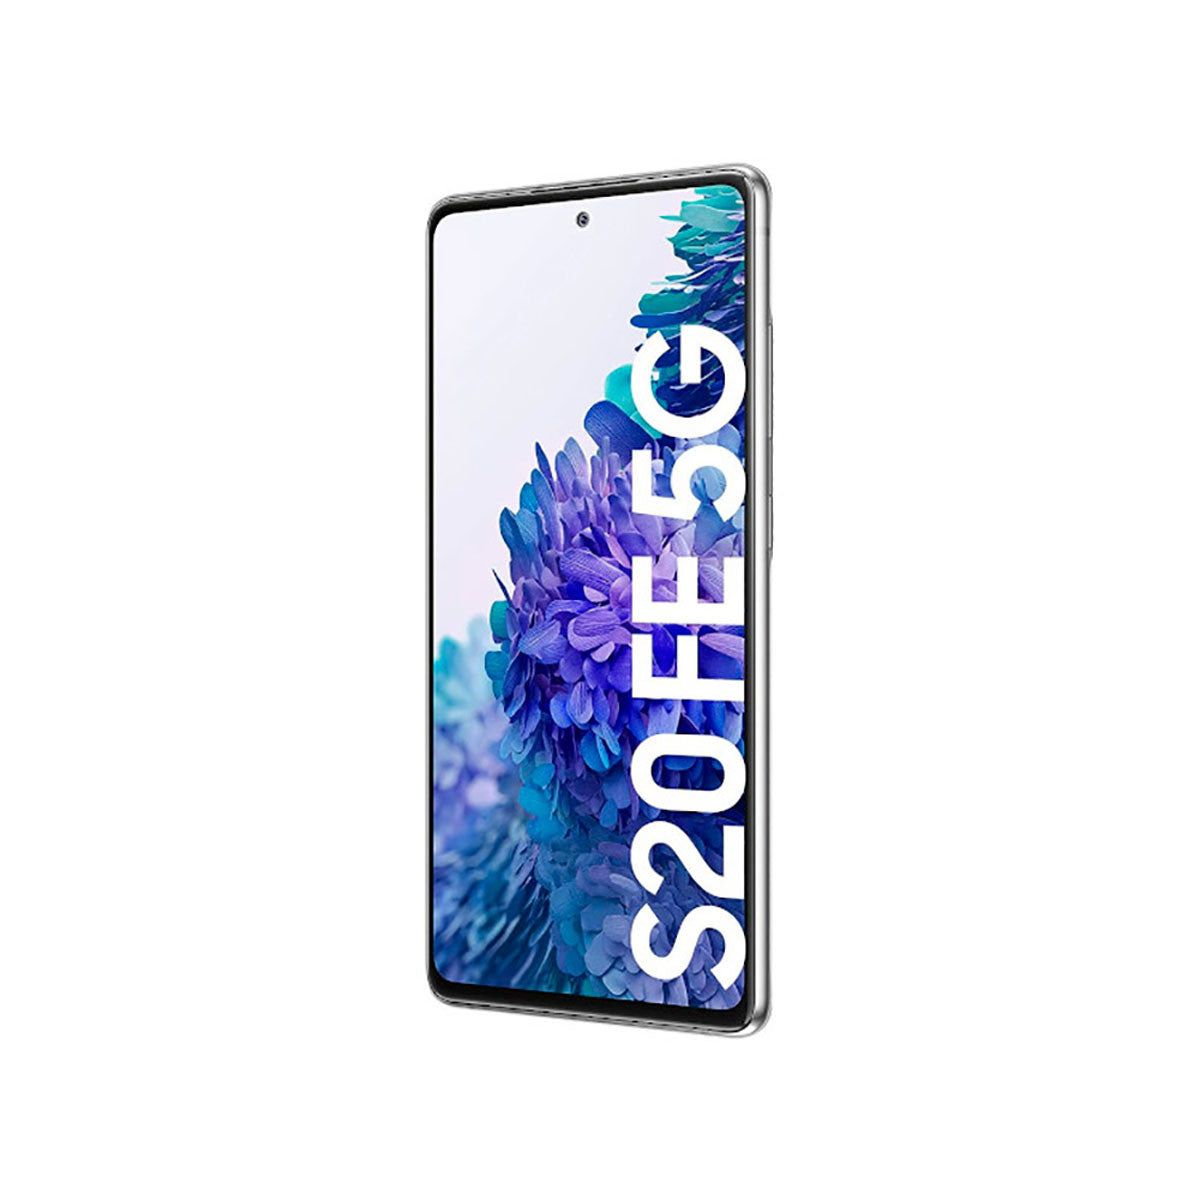 Samsung Galaxy S20 FE 5G 6GB/128GB Blanco (Cloud White) Dual SIM G781 Smartphone | Samsung